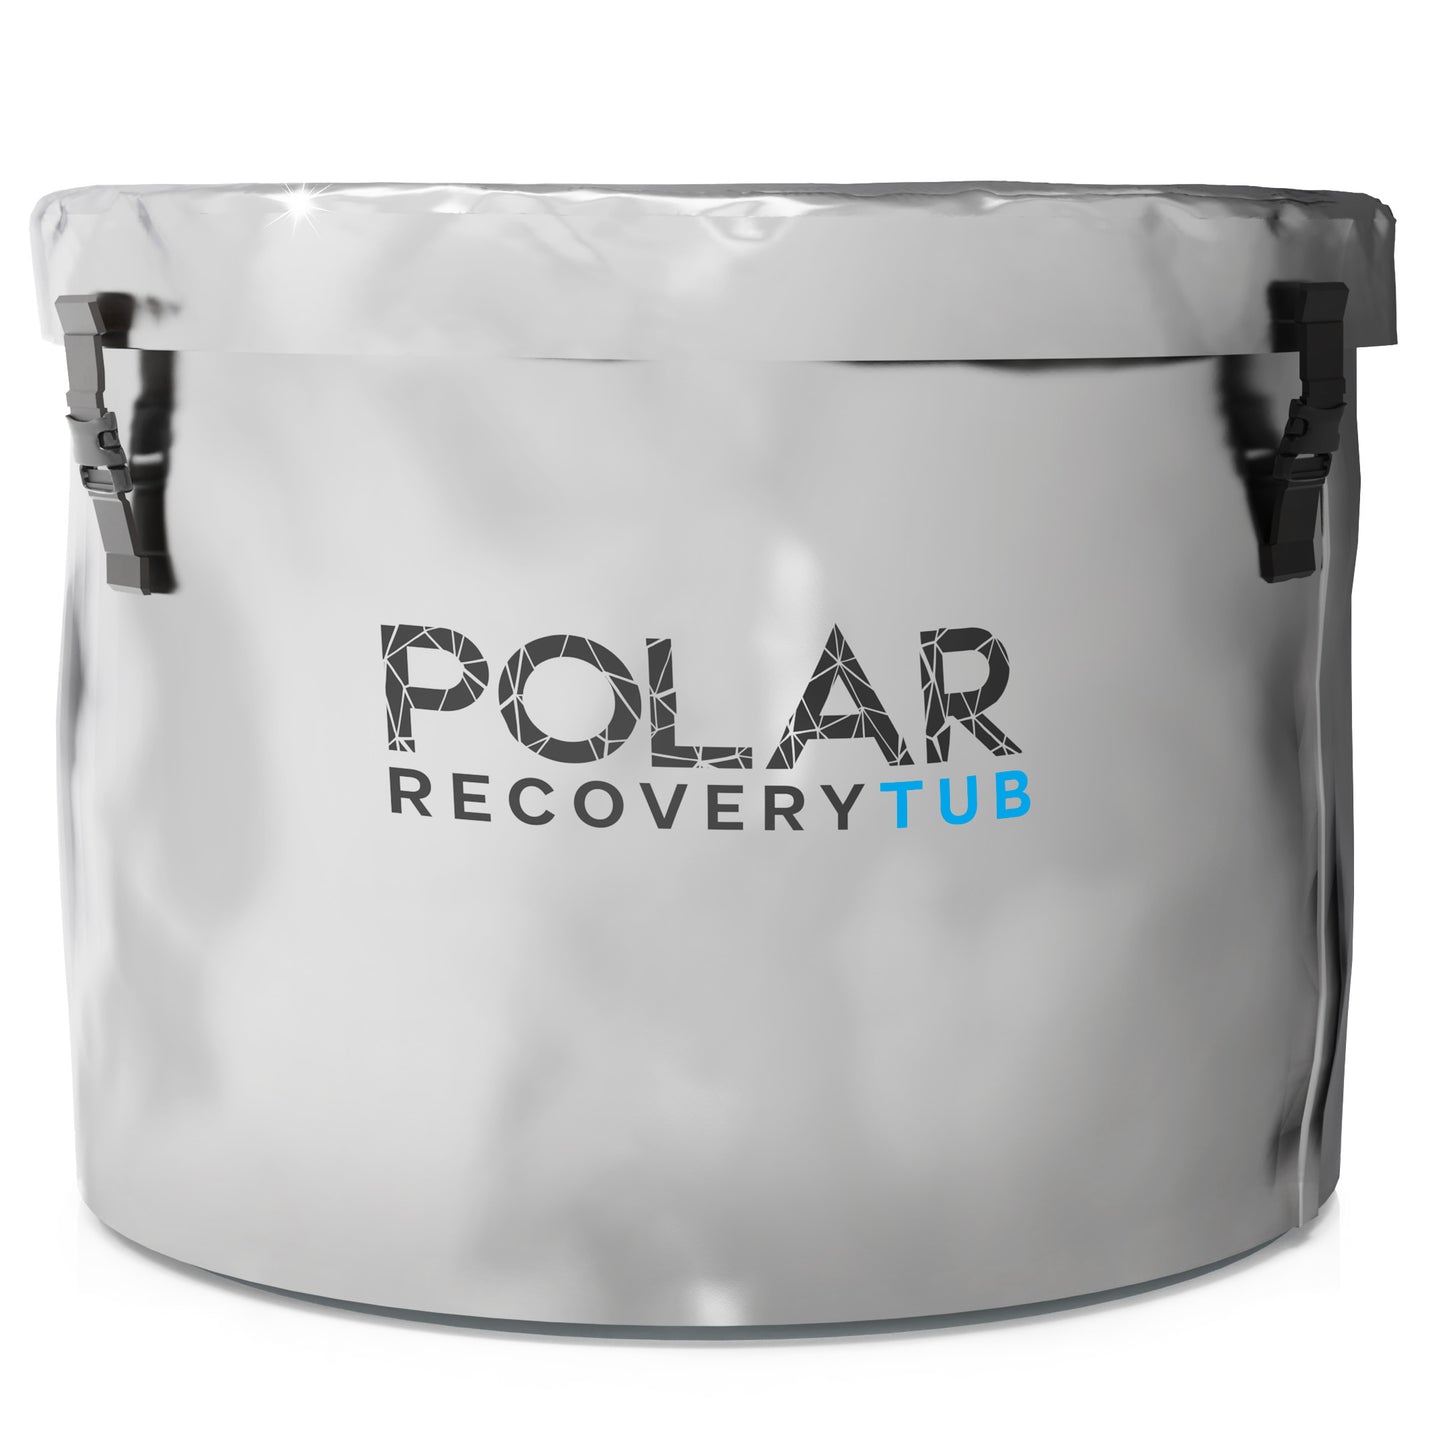 Polar Recovery™ Ice Bath Spaceship Cover